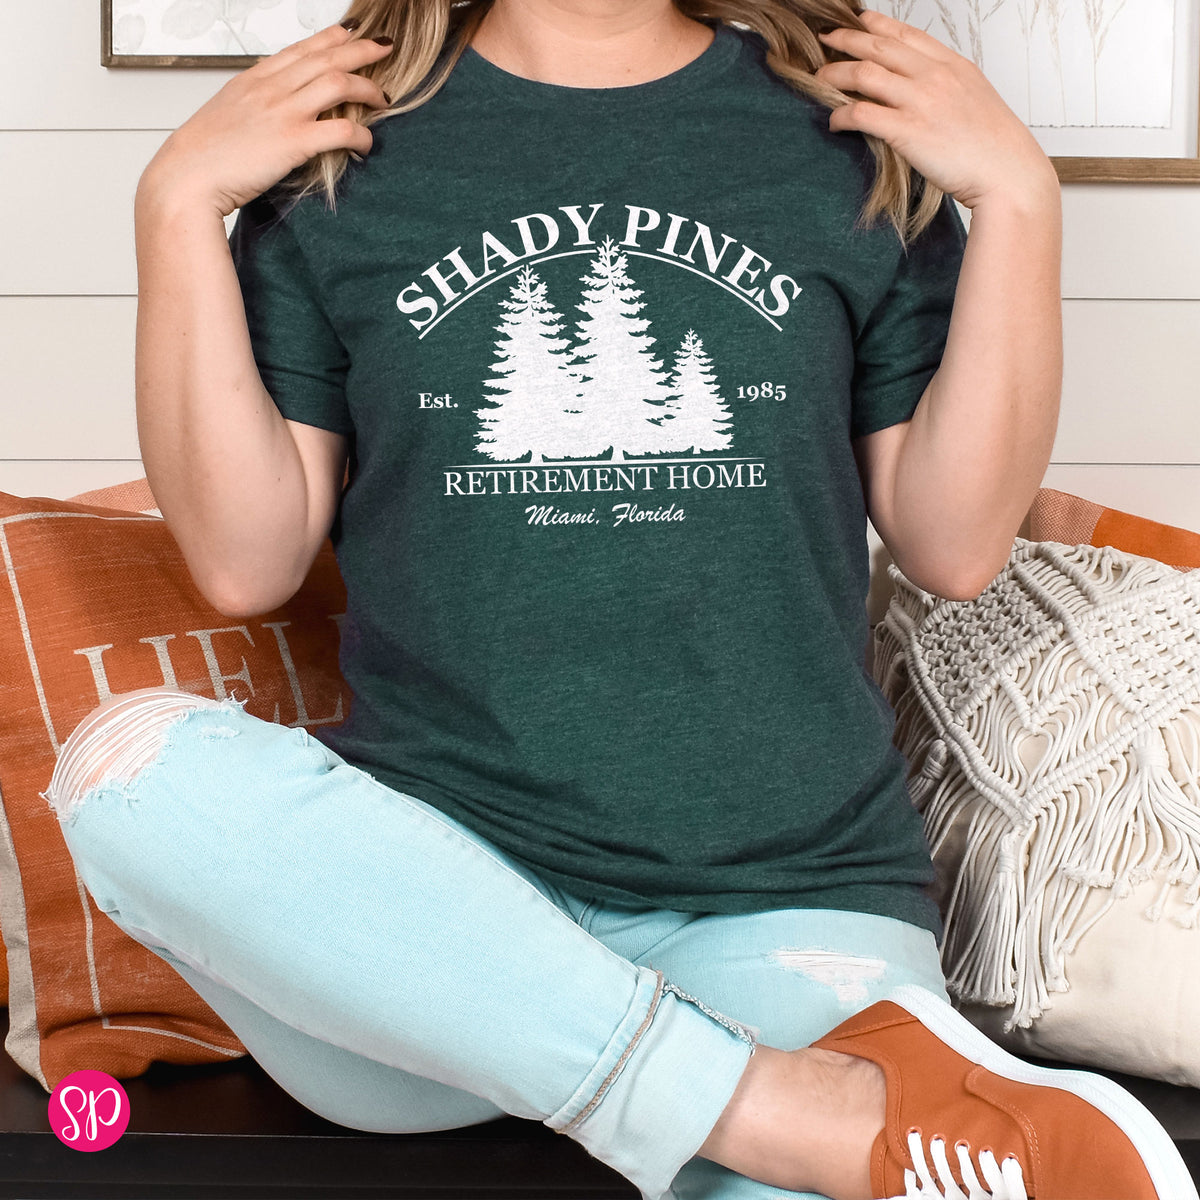 Shady Pines Golden Girls Retirement Home Miami Florida Pine Trees Funny Humor Graphic Tee Shirt